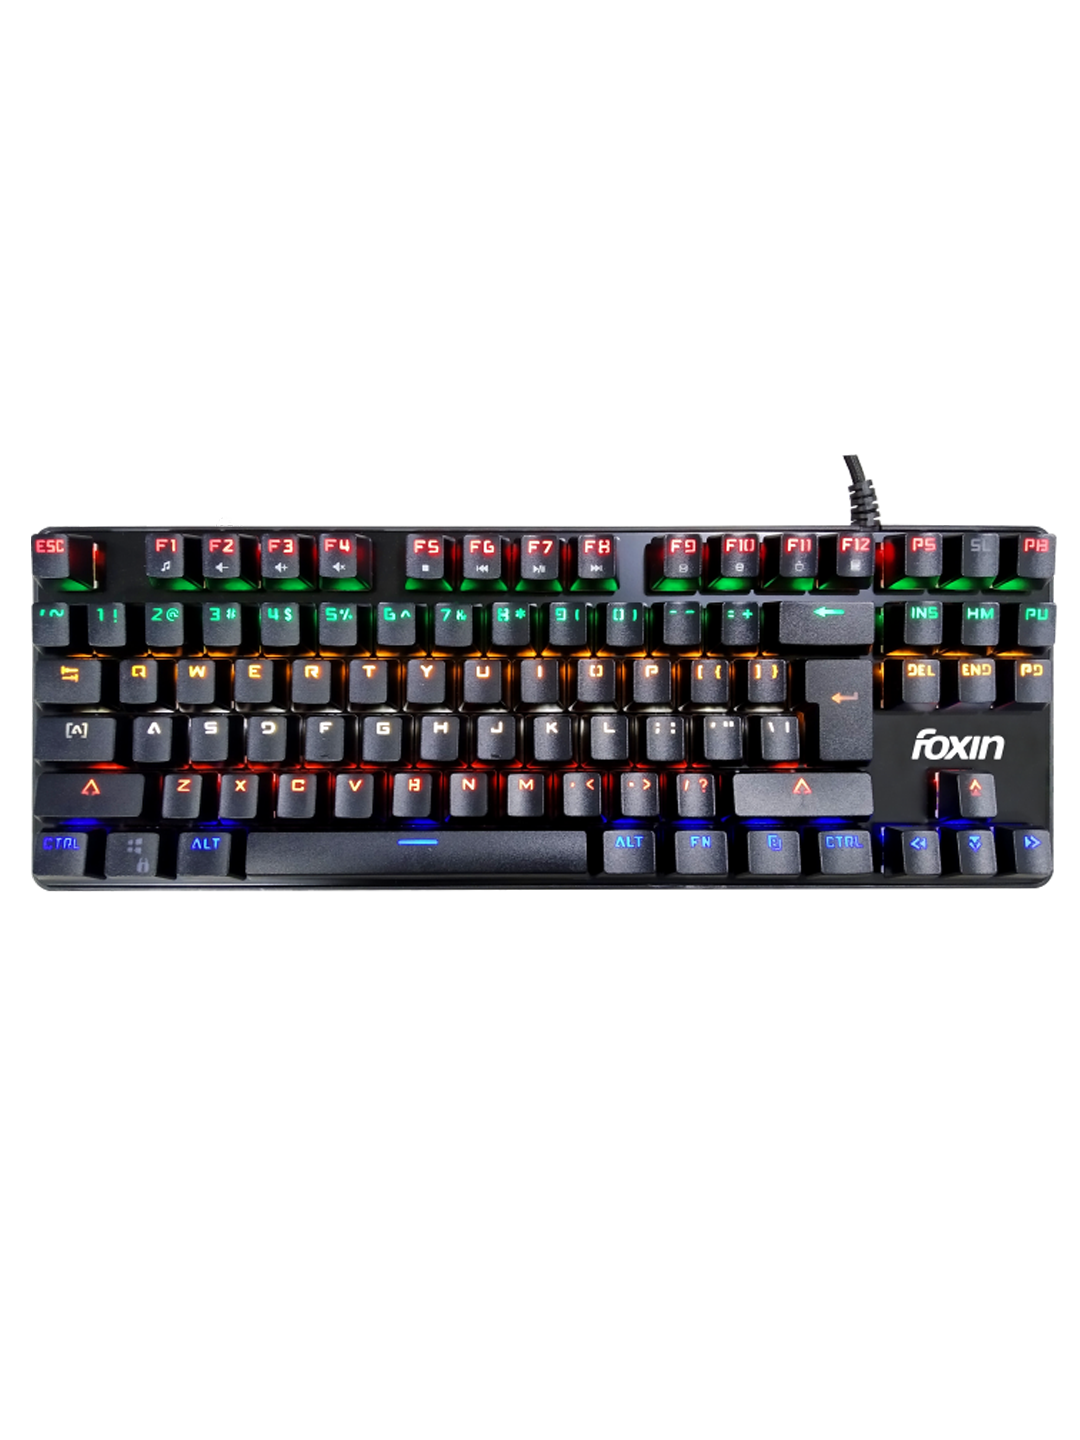 Foxin FMK 1002 RGB Gaming Keyboard 